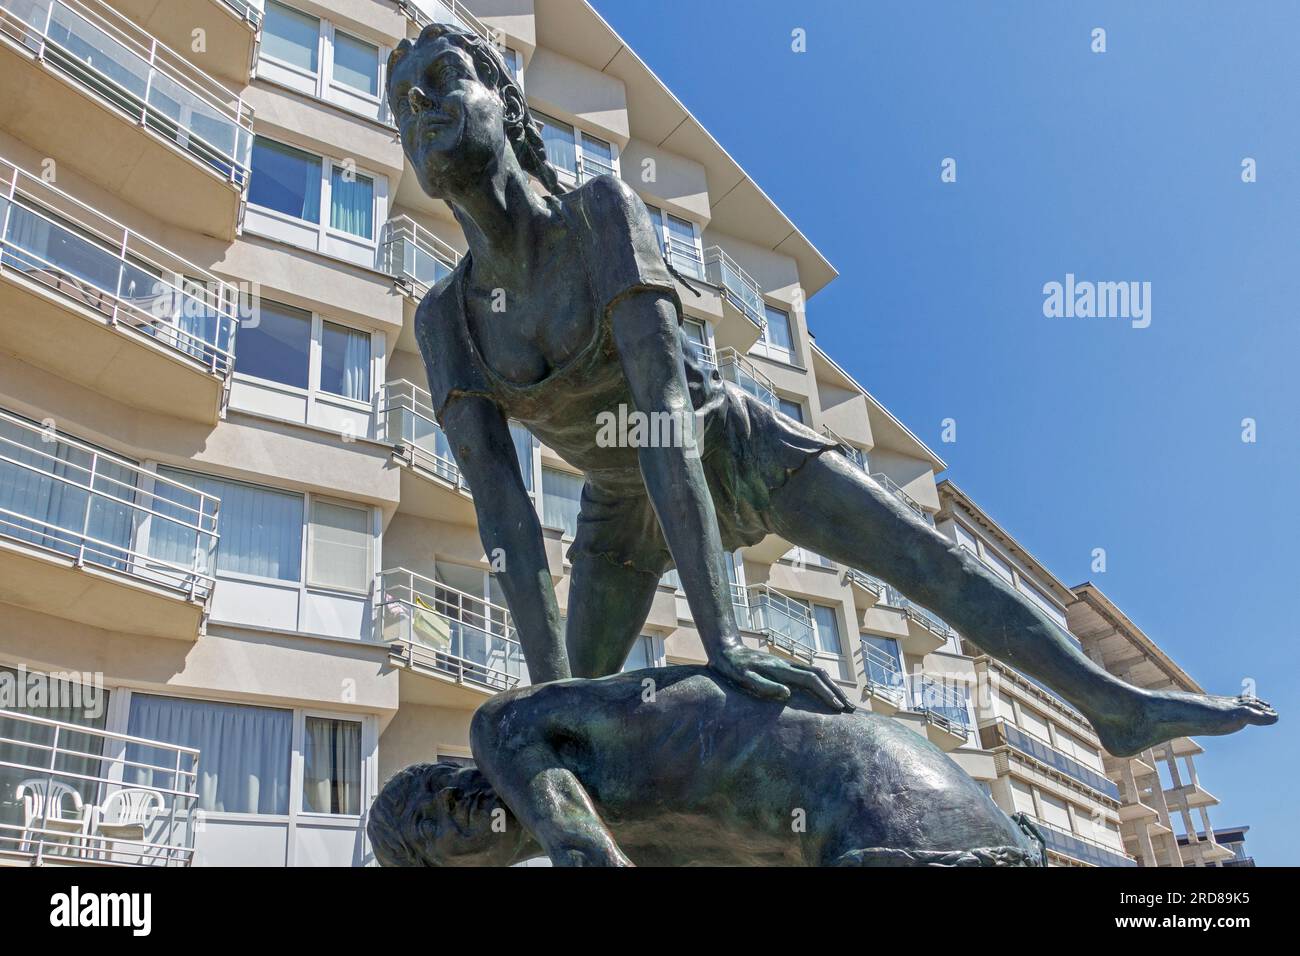 Statue Haasje Over on the sea dyke and flats / apartments at seaside resort Koksijde / Coxyde along the North Sea coast, West Flanders, Belgium Stock Photo